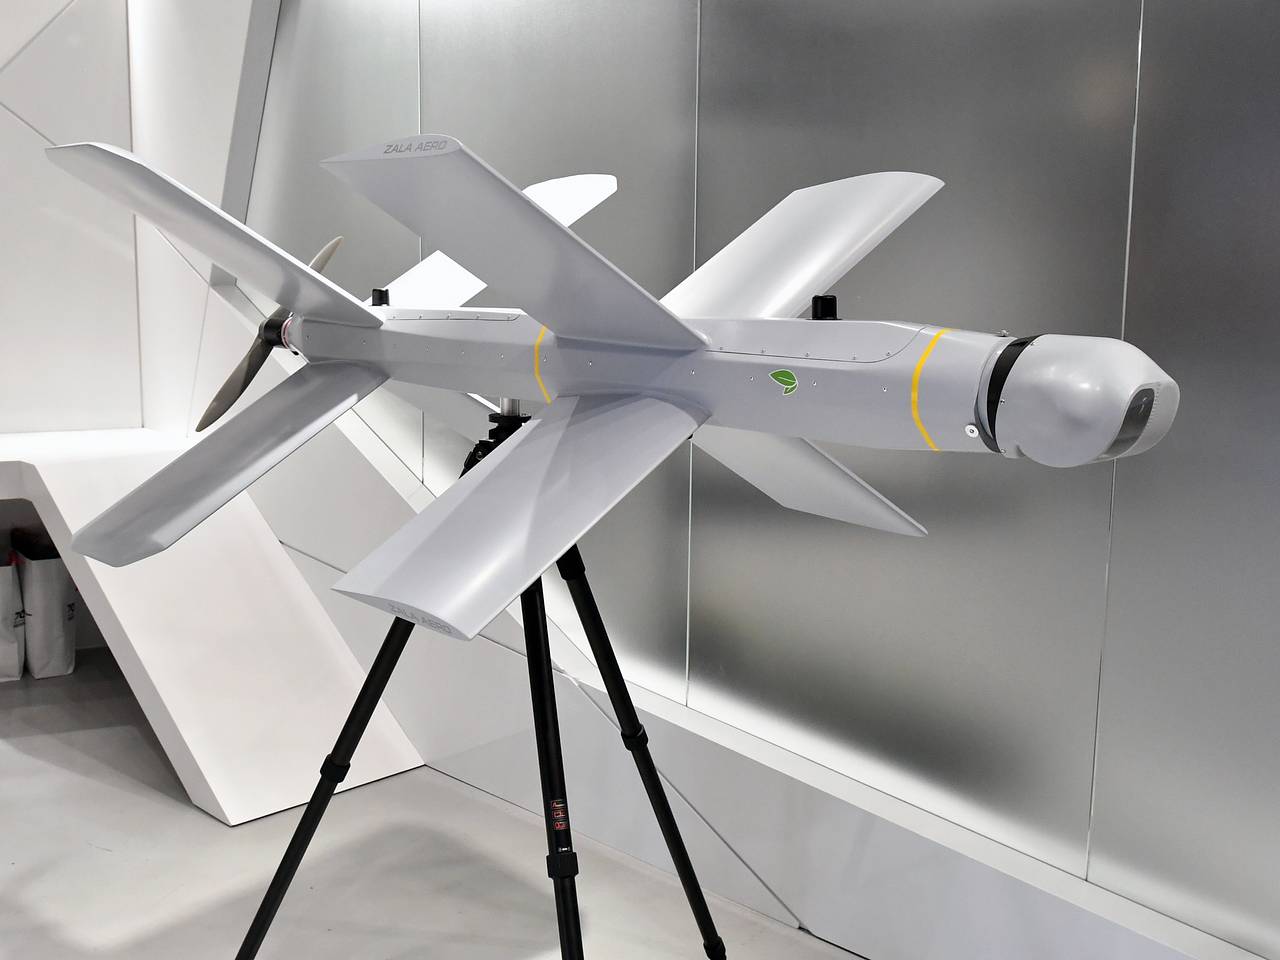 The Lancet kamikaze drone, Defense Express